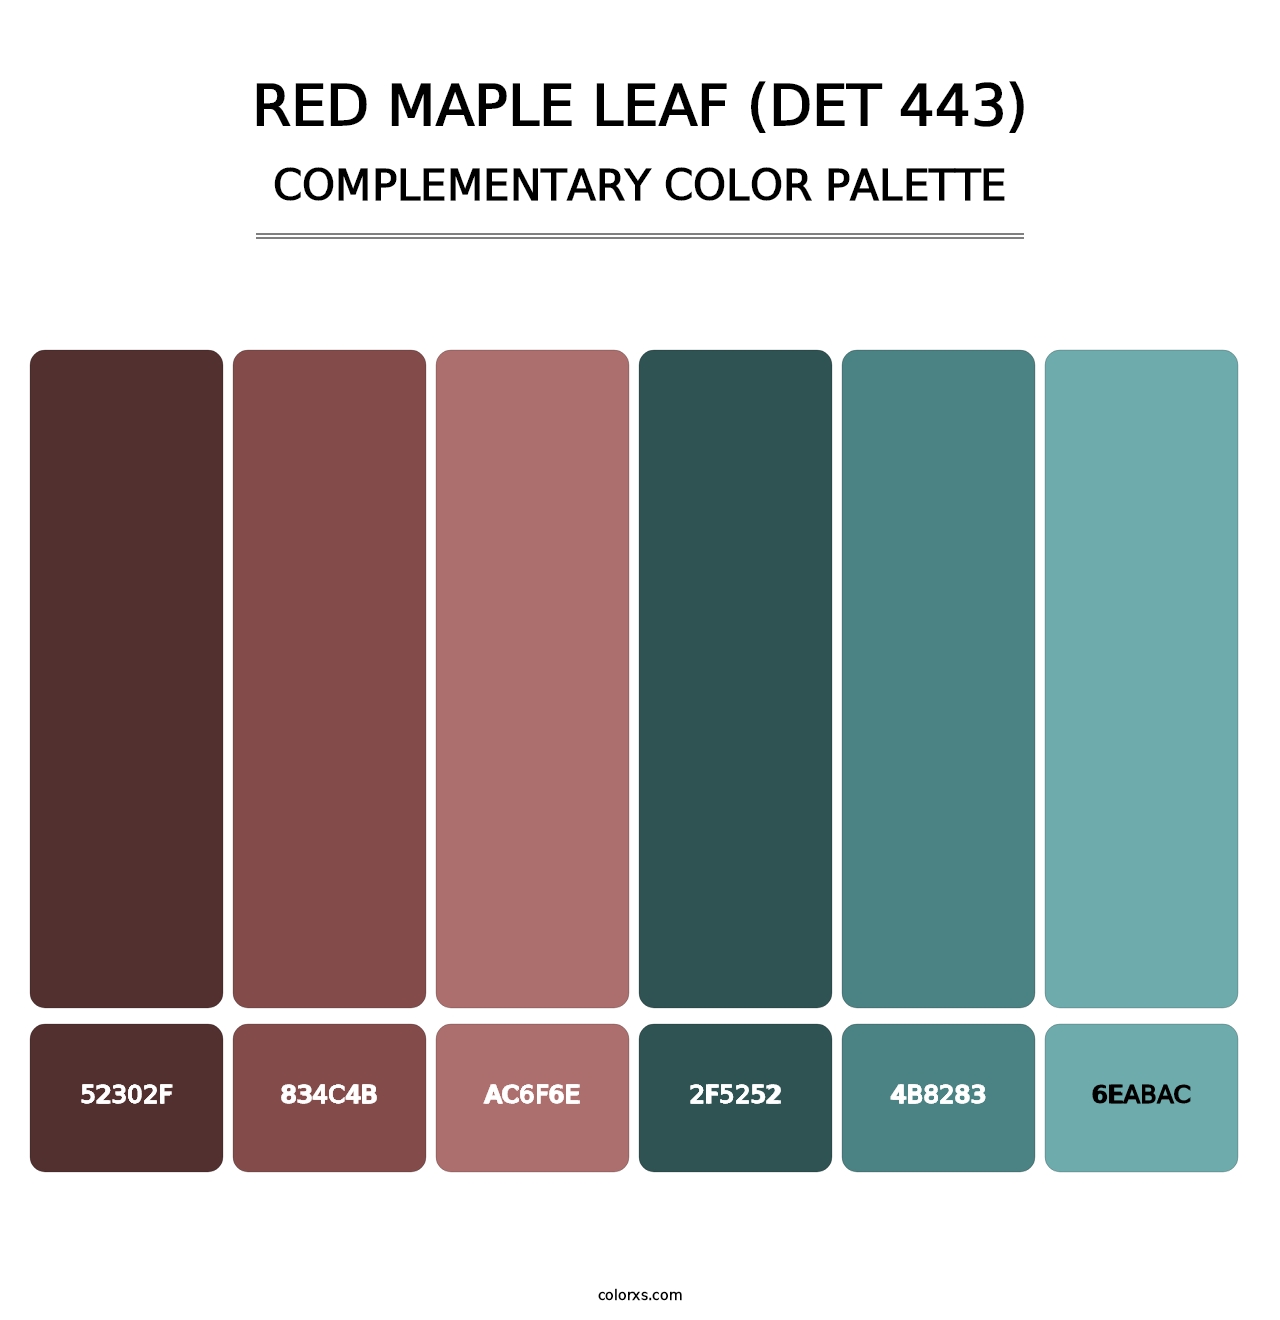 Red Maple Leaf (DET 443) - Complementary Color Palette